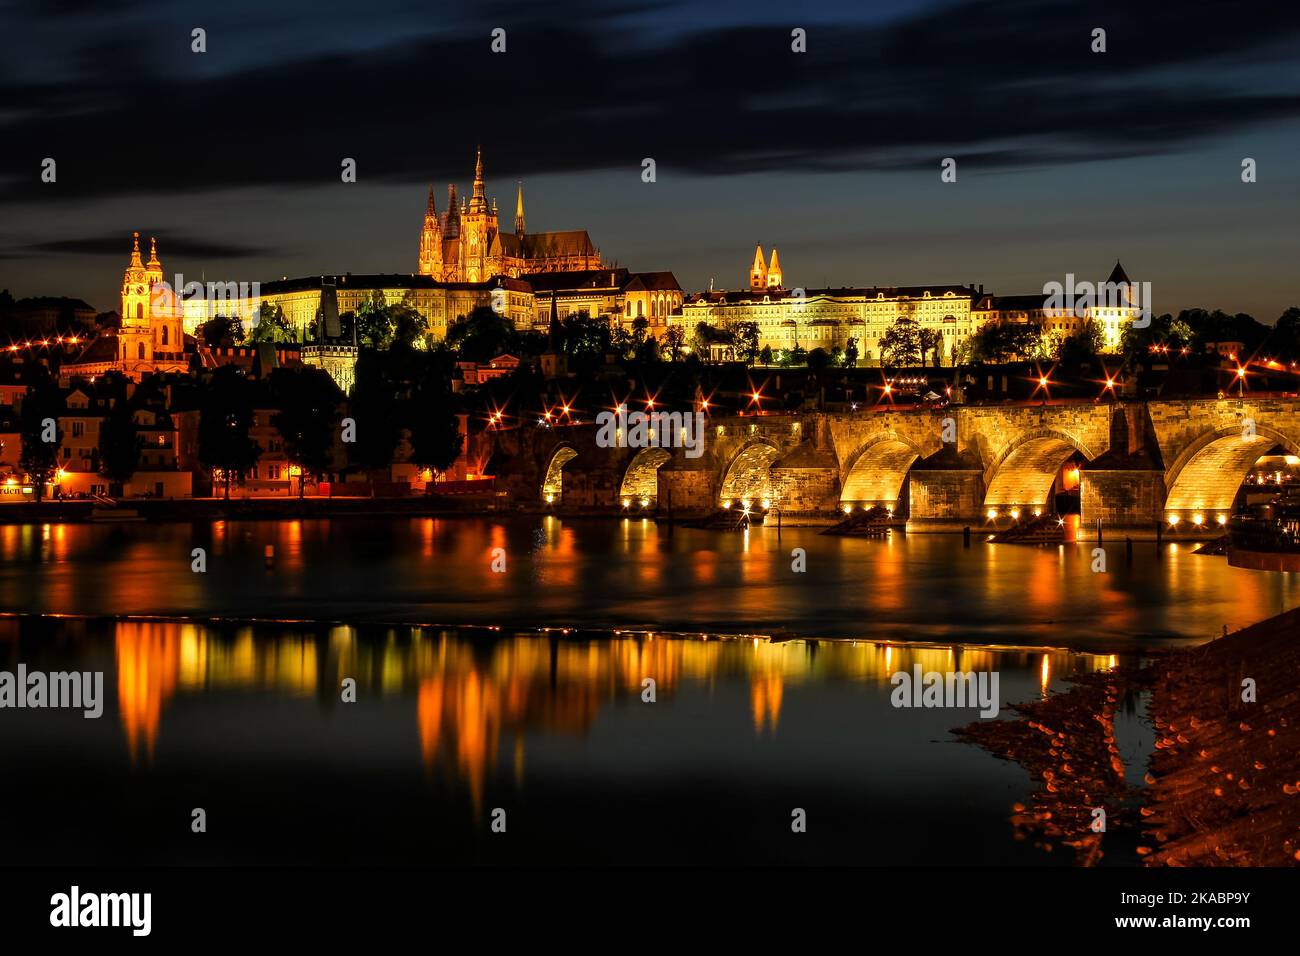 Evening view of illuminated Prazsky Hrad, Charles bridge and Vltava river in Prague, Czech Republic. Stock Photo